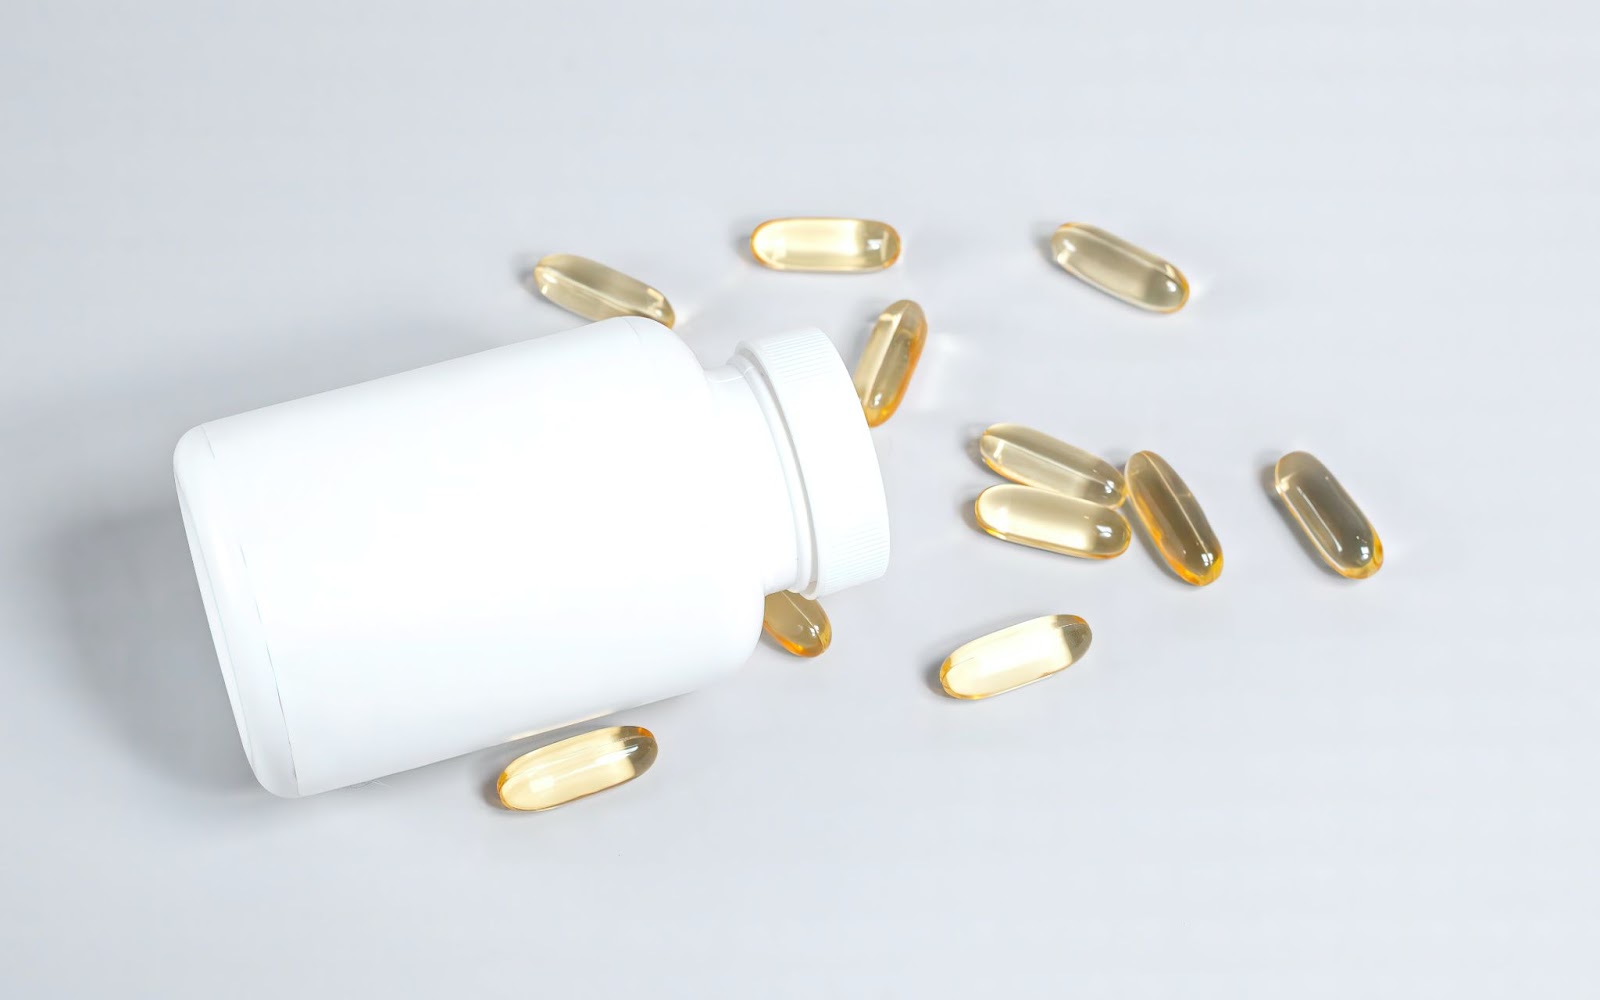 NMN supplements bottle and pills